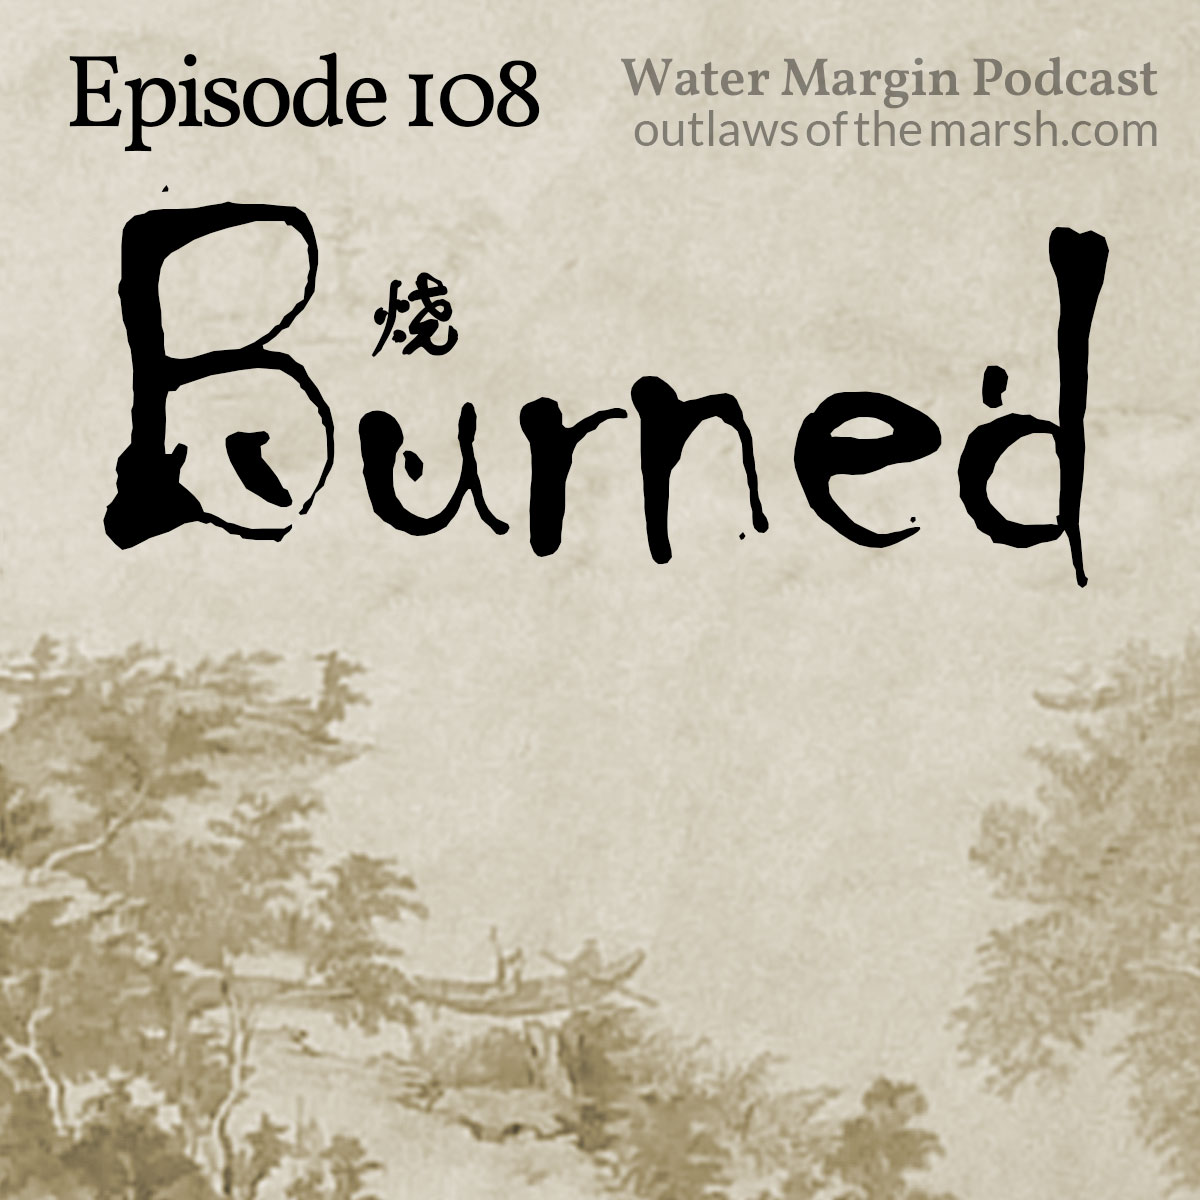 Water Margin Podcast: Episode 108